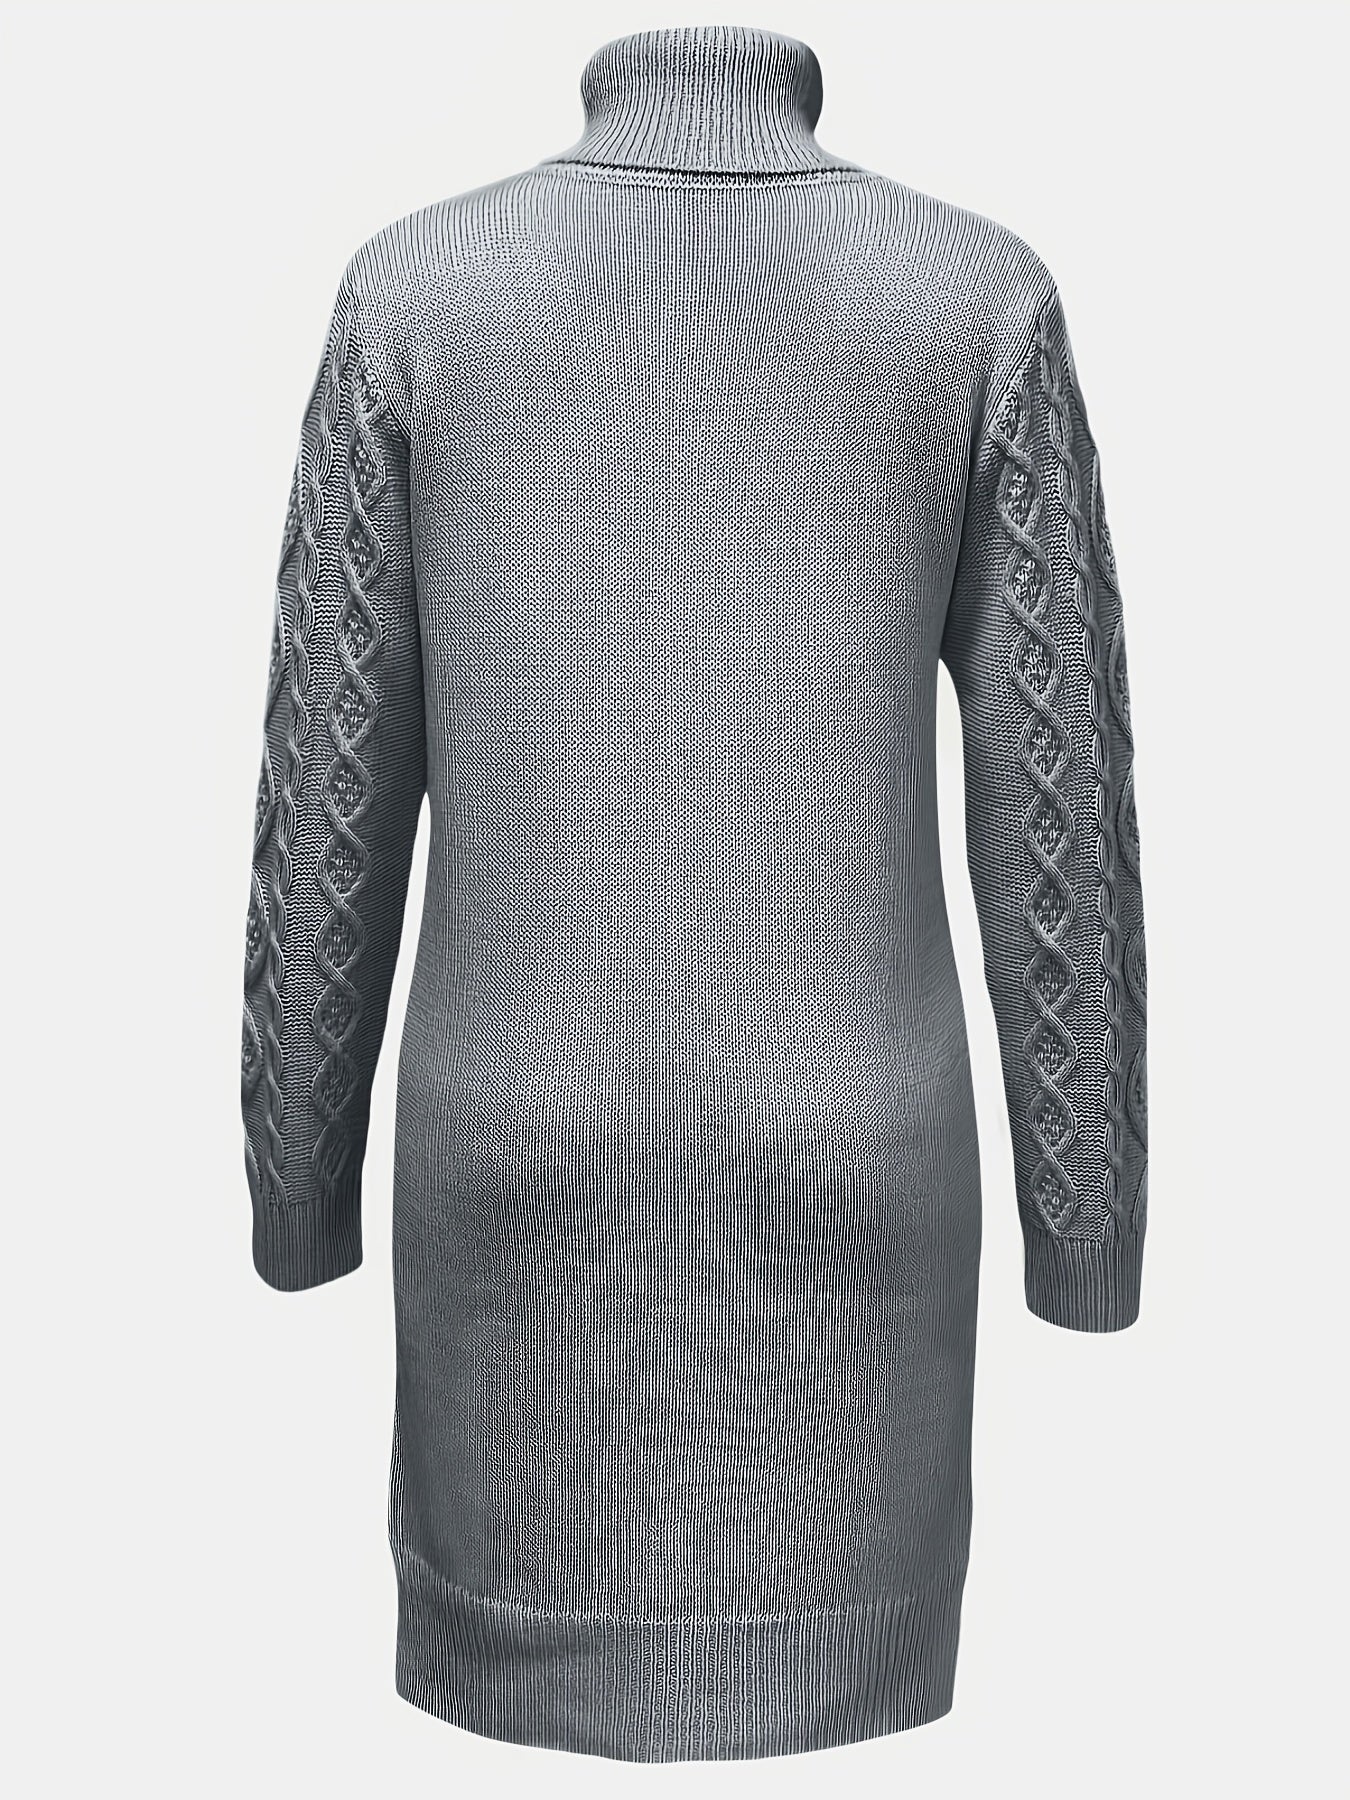 Antmvs Solid Turtleneck Split Knitted Dress, Elegant Long Sleeve Dress For Fall & Winter, Women's Clothing